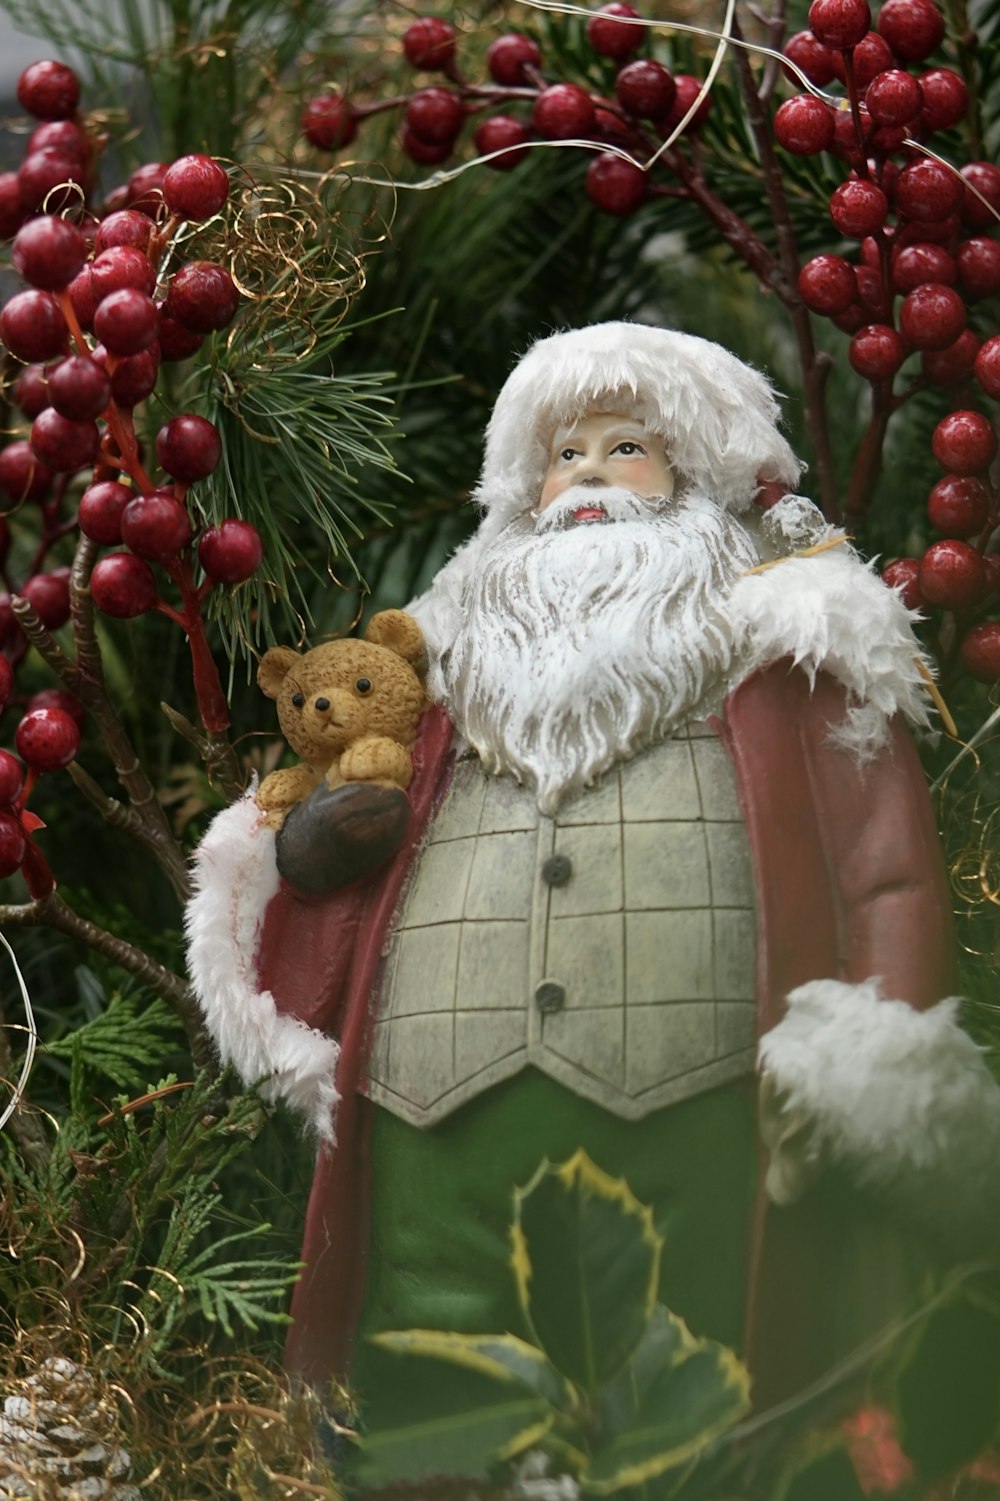 a statue of santa claus holding a teddy bear